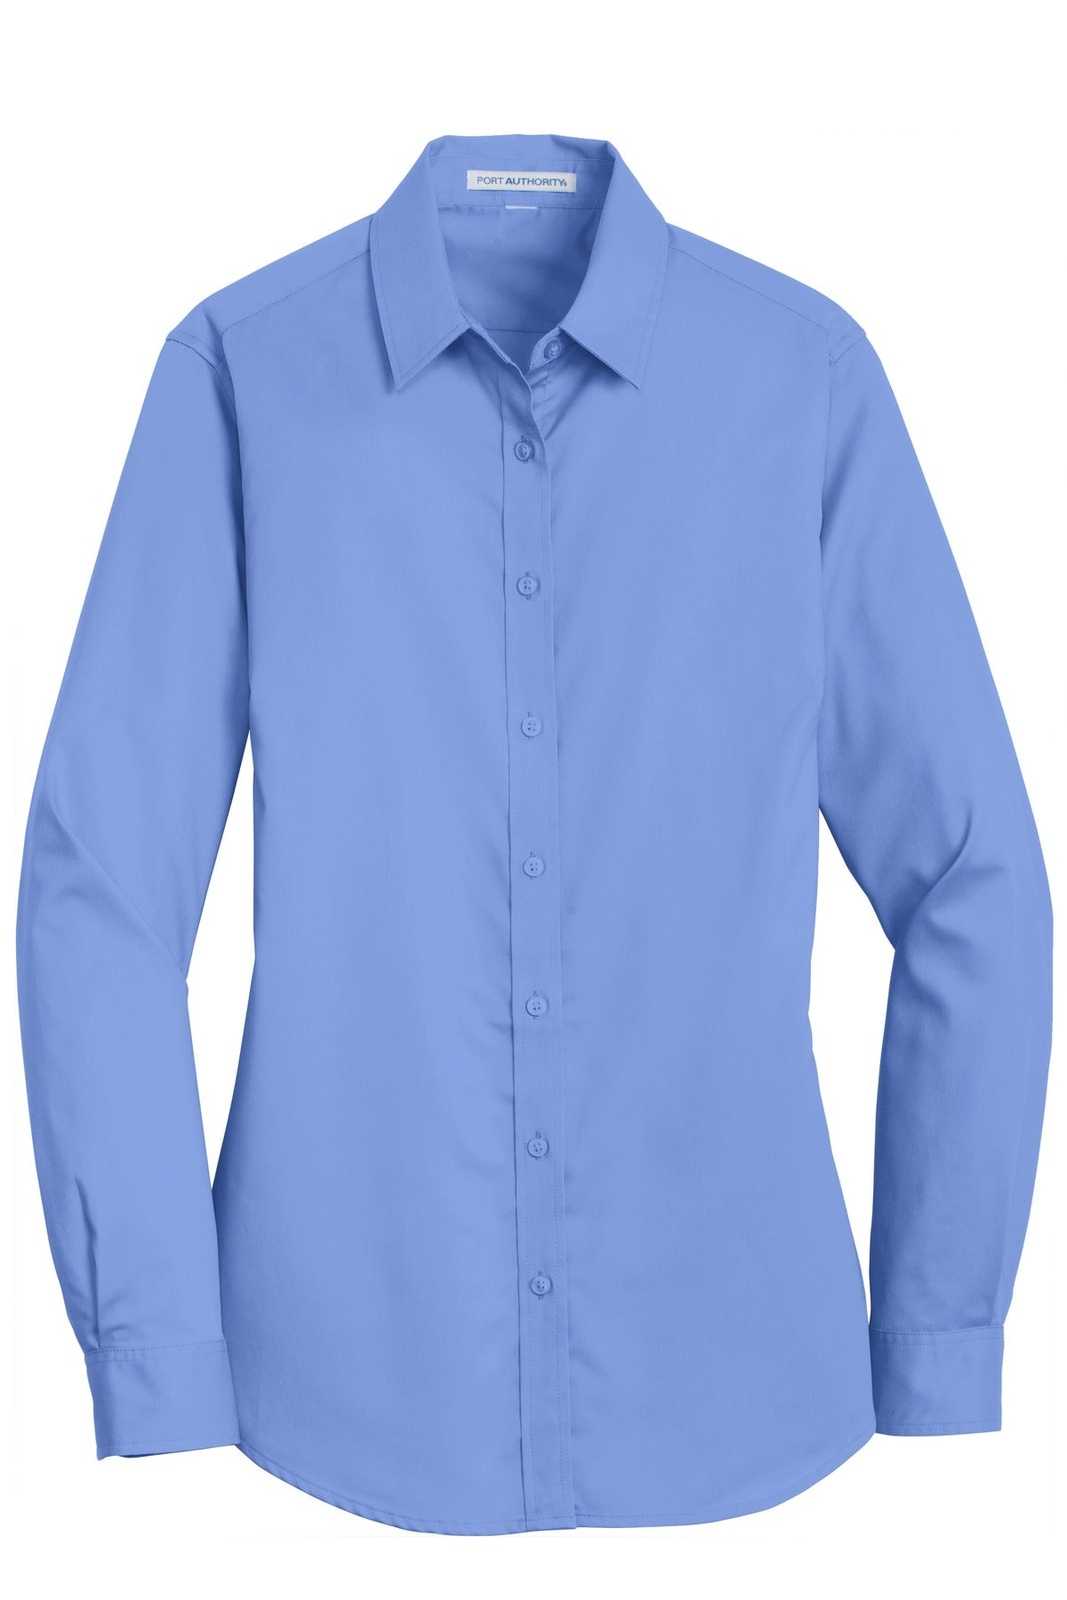 Port Authority L663 Ladies Superpro Twill Shirt - Ultramarine Blue - HIT a Double - 5